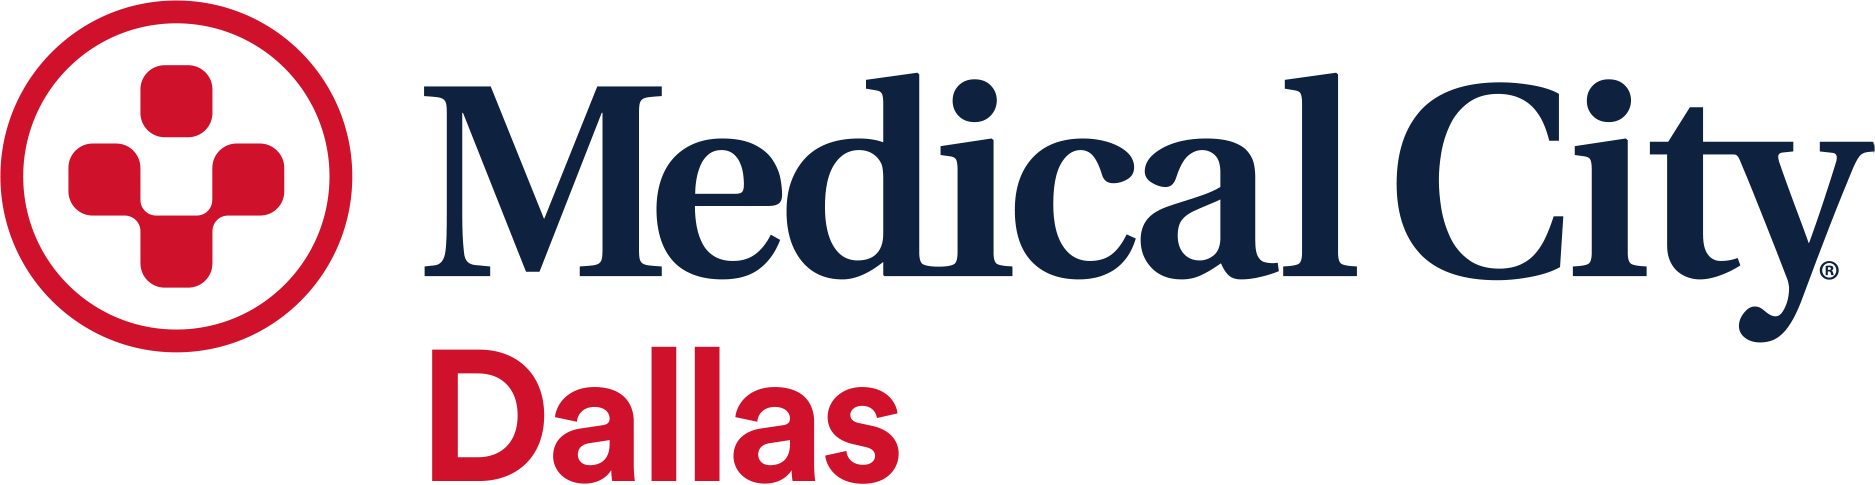 Medical City Dallas - Medical City Dallas Hospital Logo (1875x485)